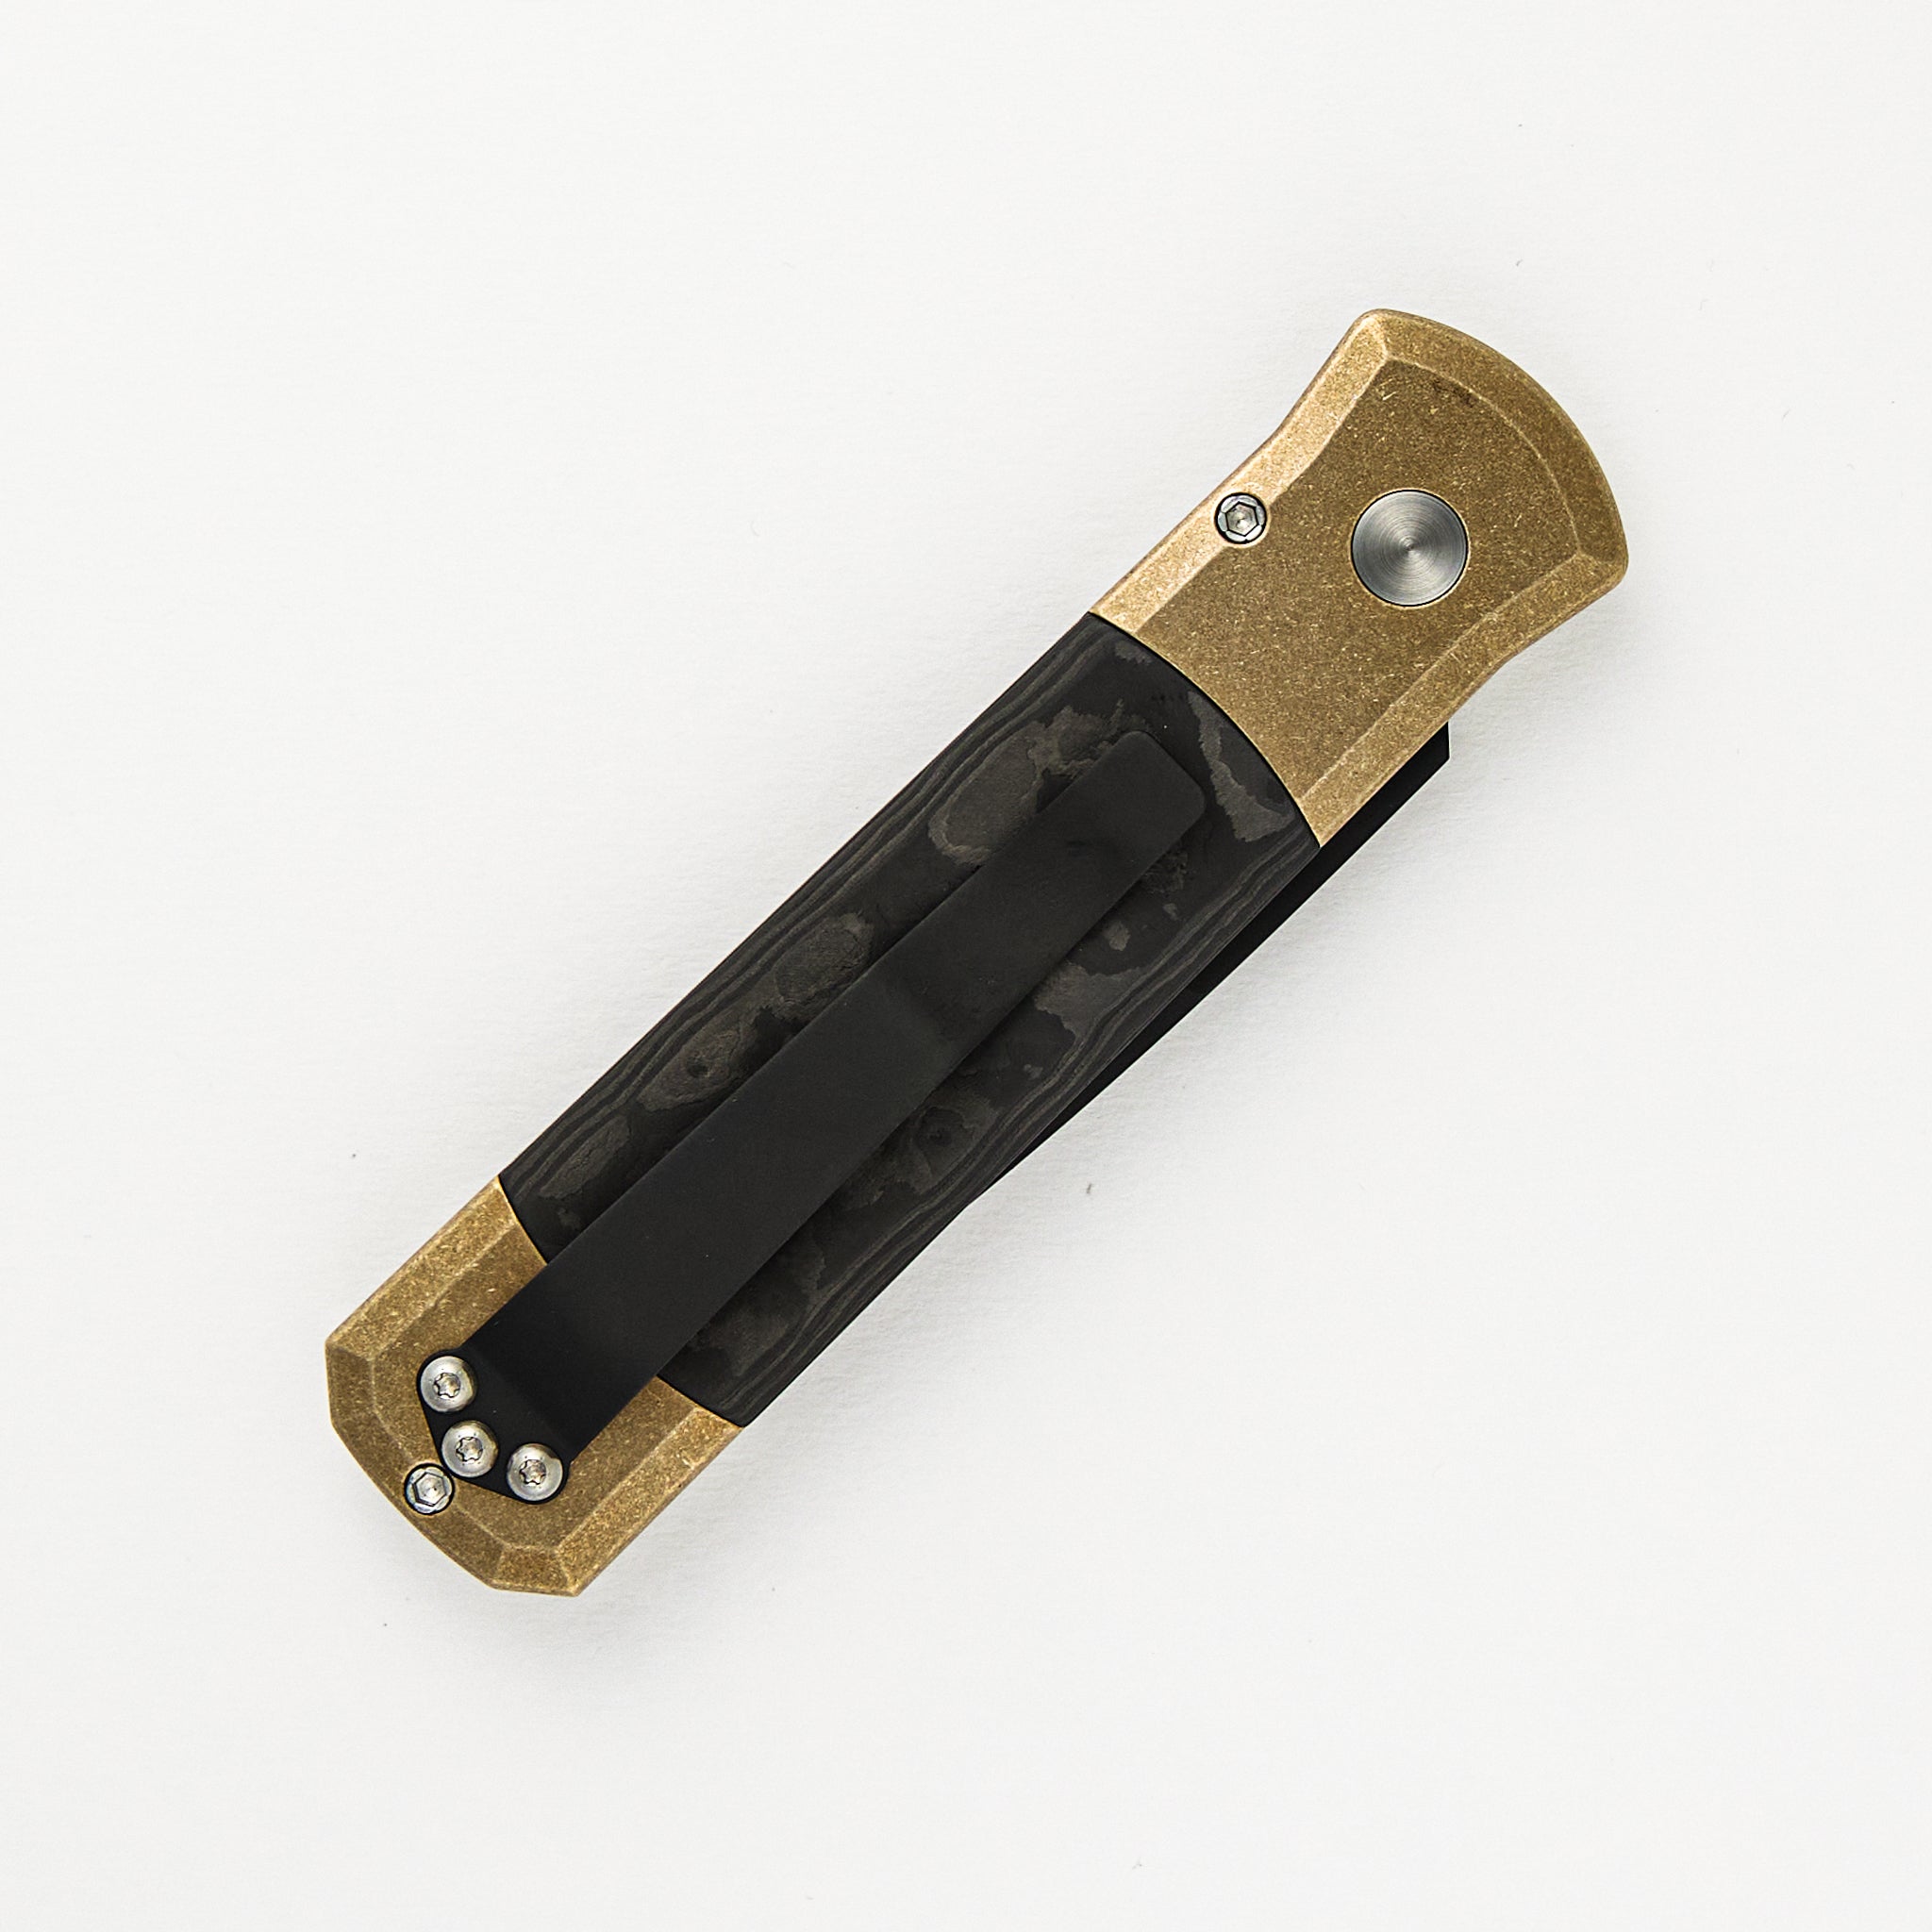 Pro-Tech Knives Godson Ltd. - AL Bronze Handle W/ Fat Carbon "Camo" Inlays, Black Pearl Button, DLC Blade 7115-CAMO